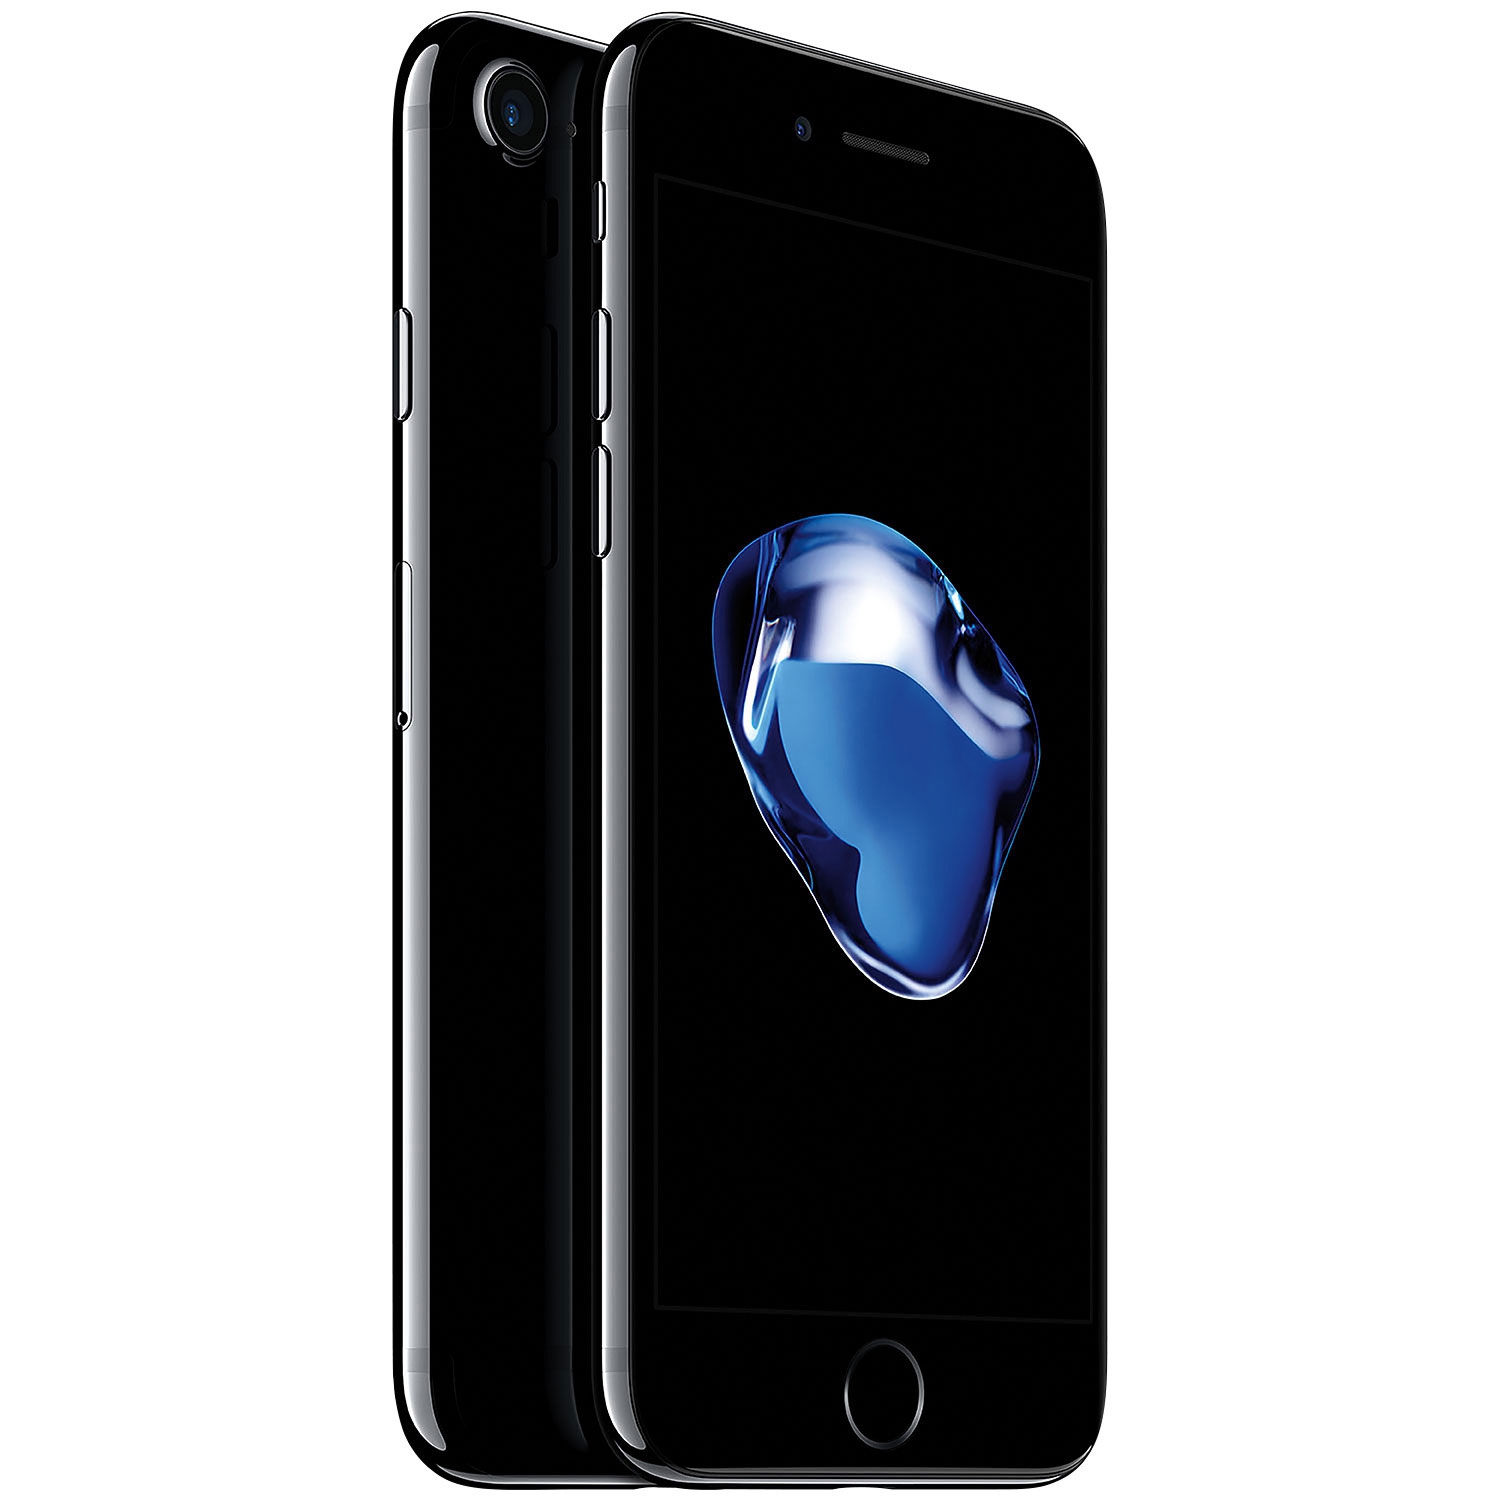 Refurbished (Excellent) - Apple iPhone 7 32GB Smartphone - Jet Black - Unlocked - Certified Refurbished